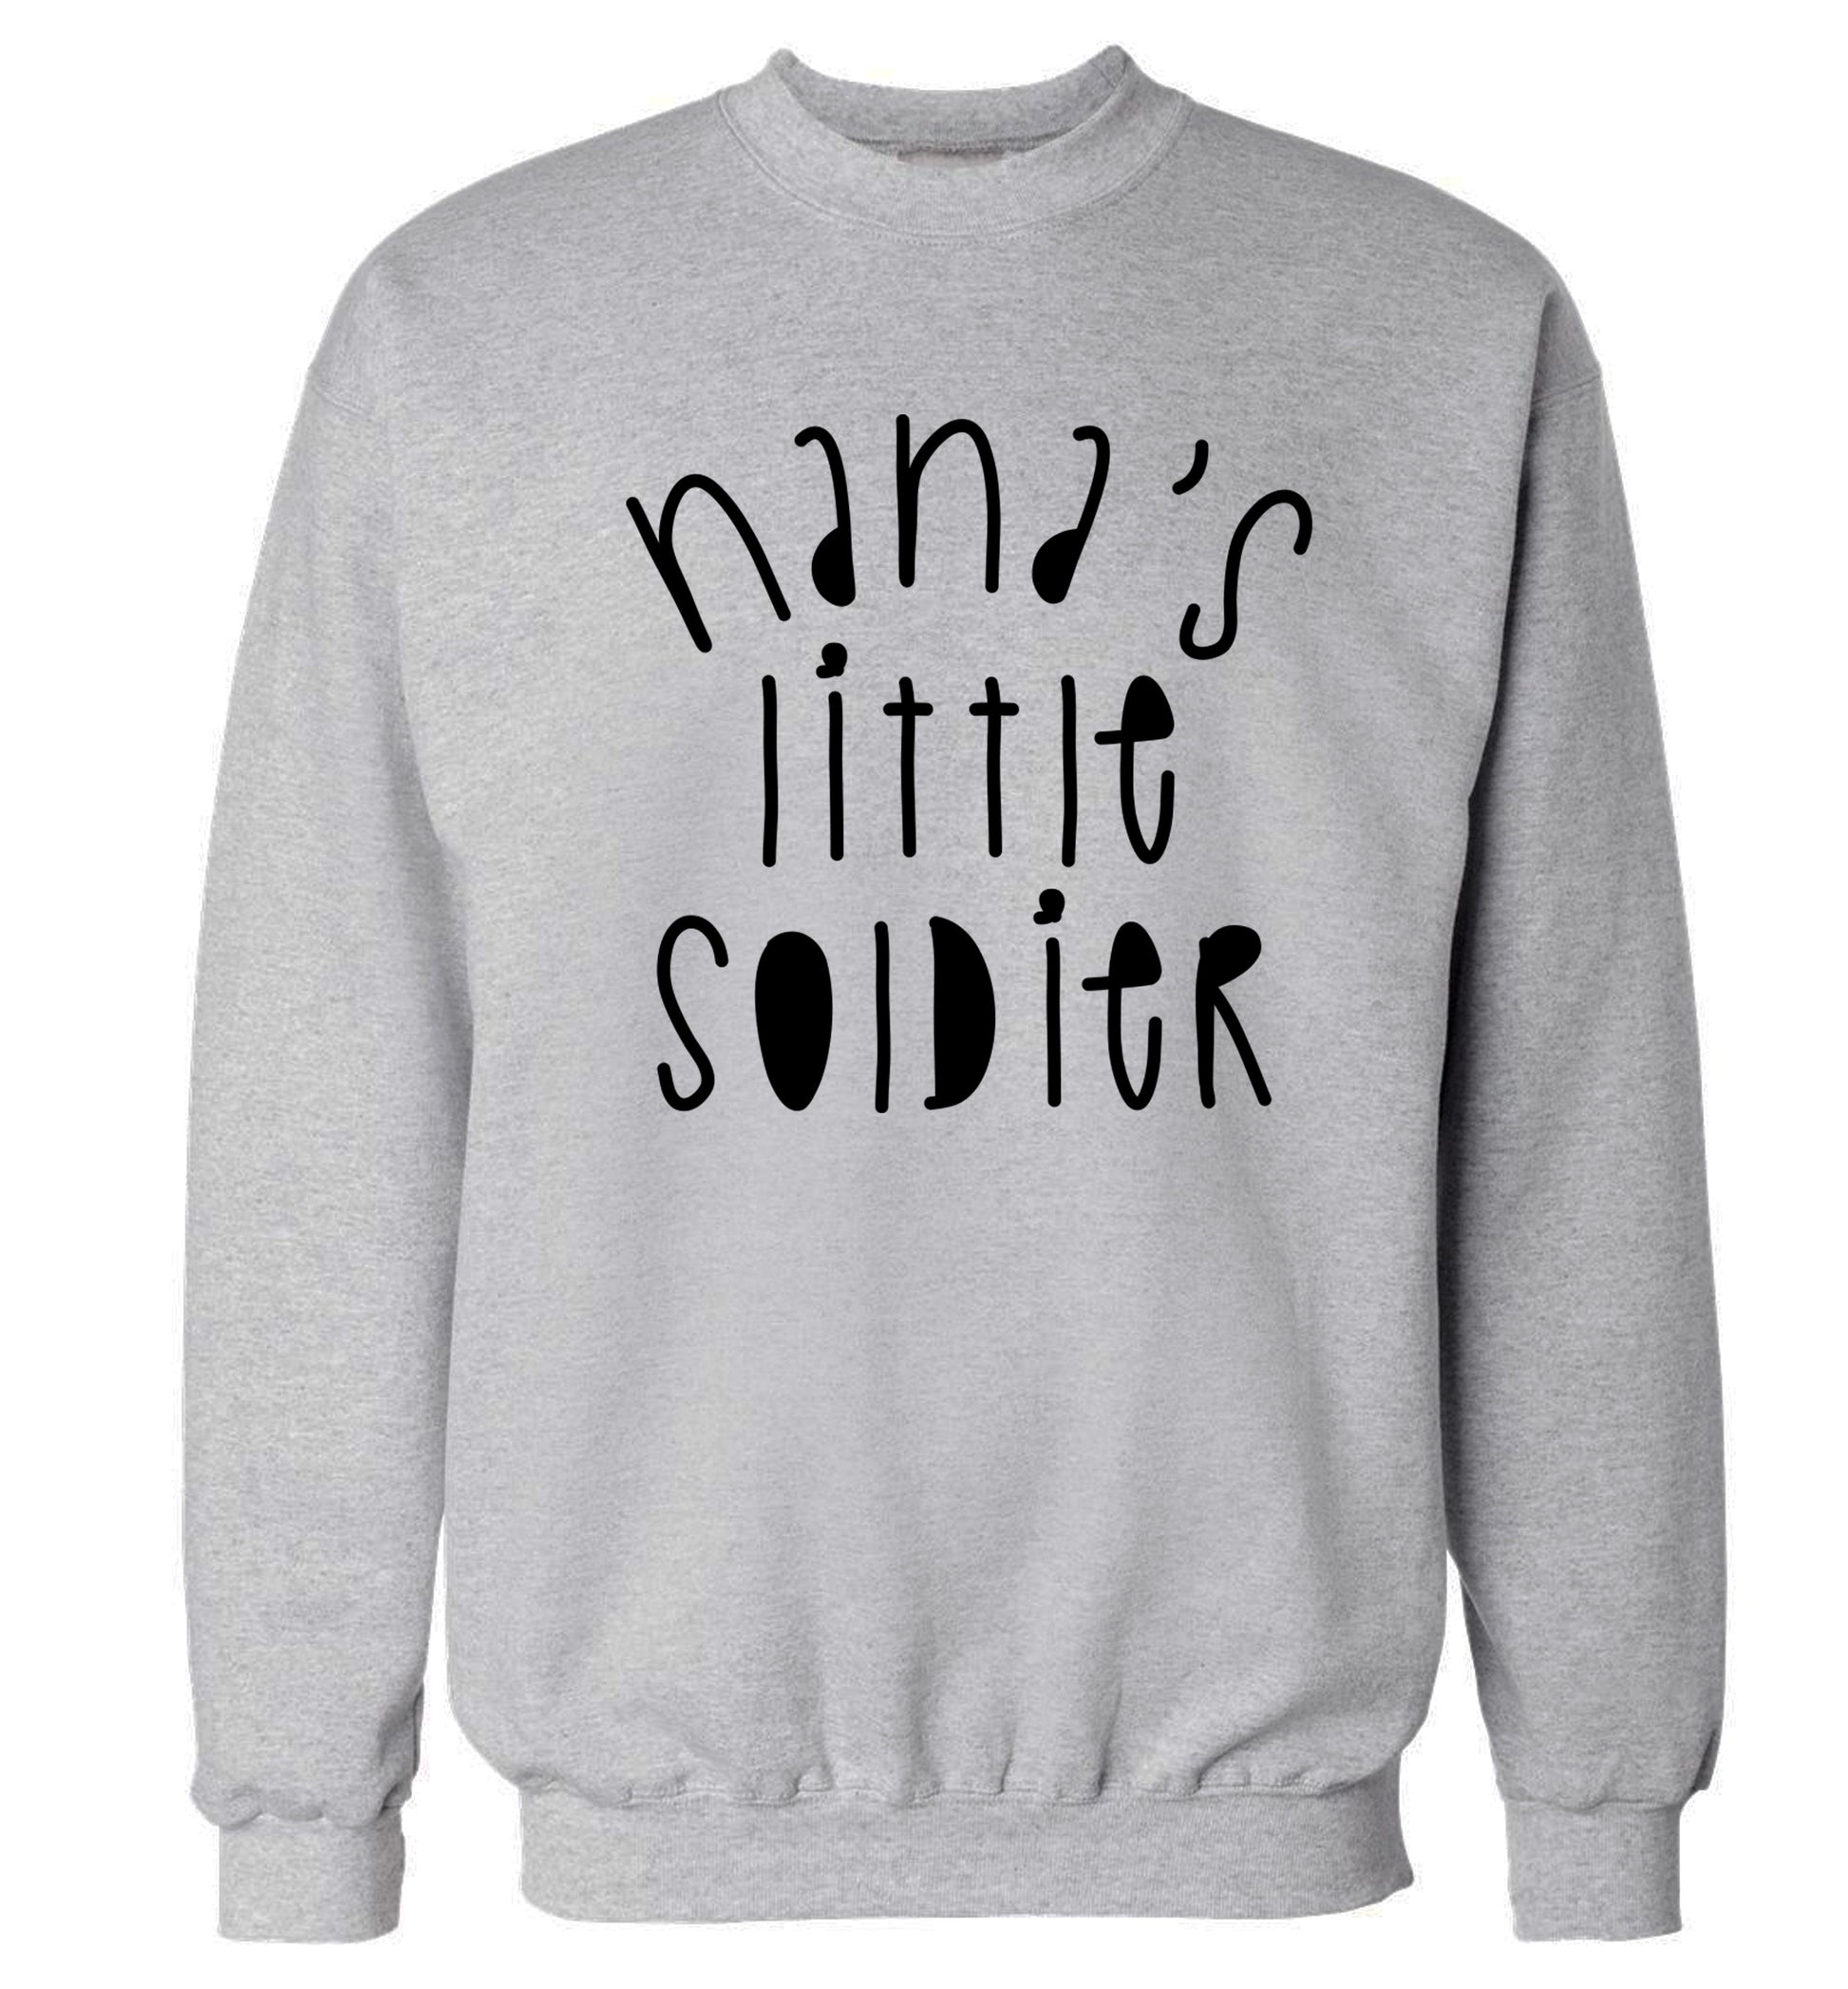 Nana's little soldier Adult's unisex grey Sweater 2XL